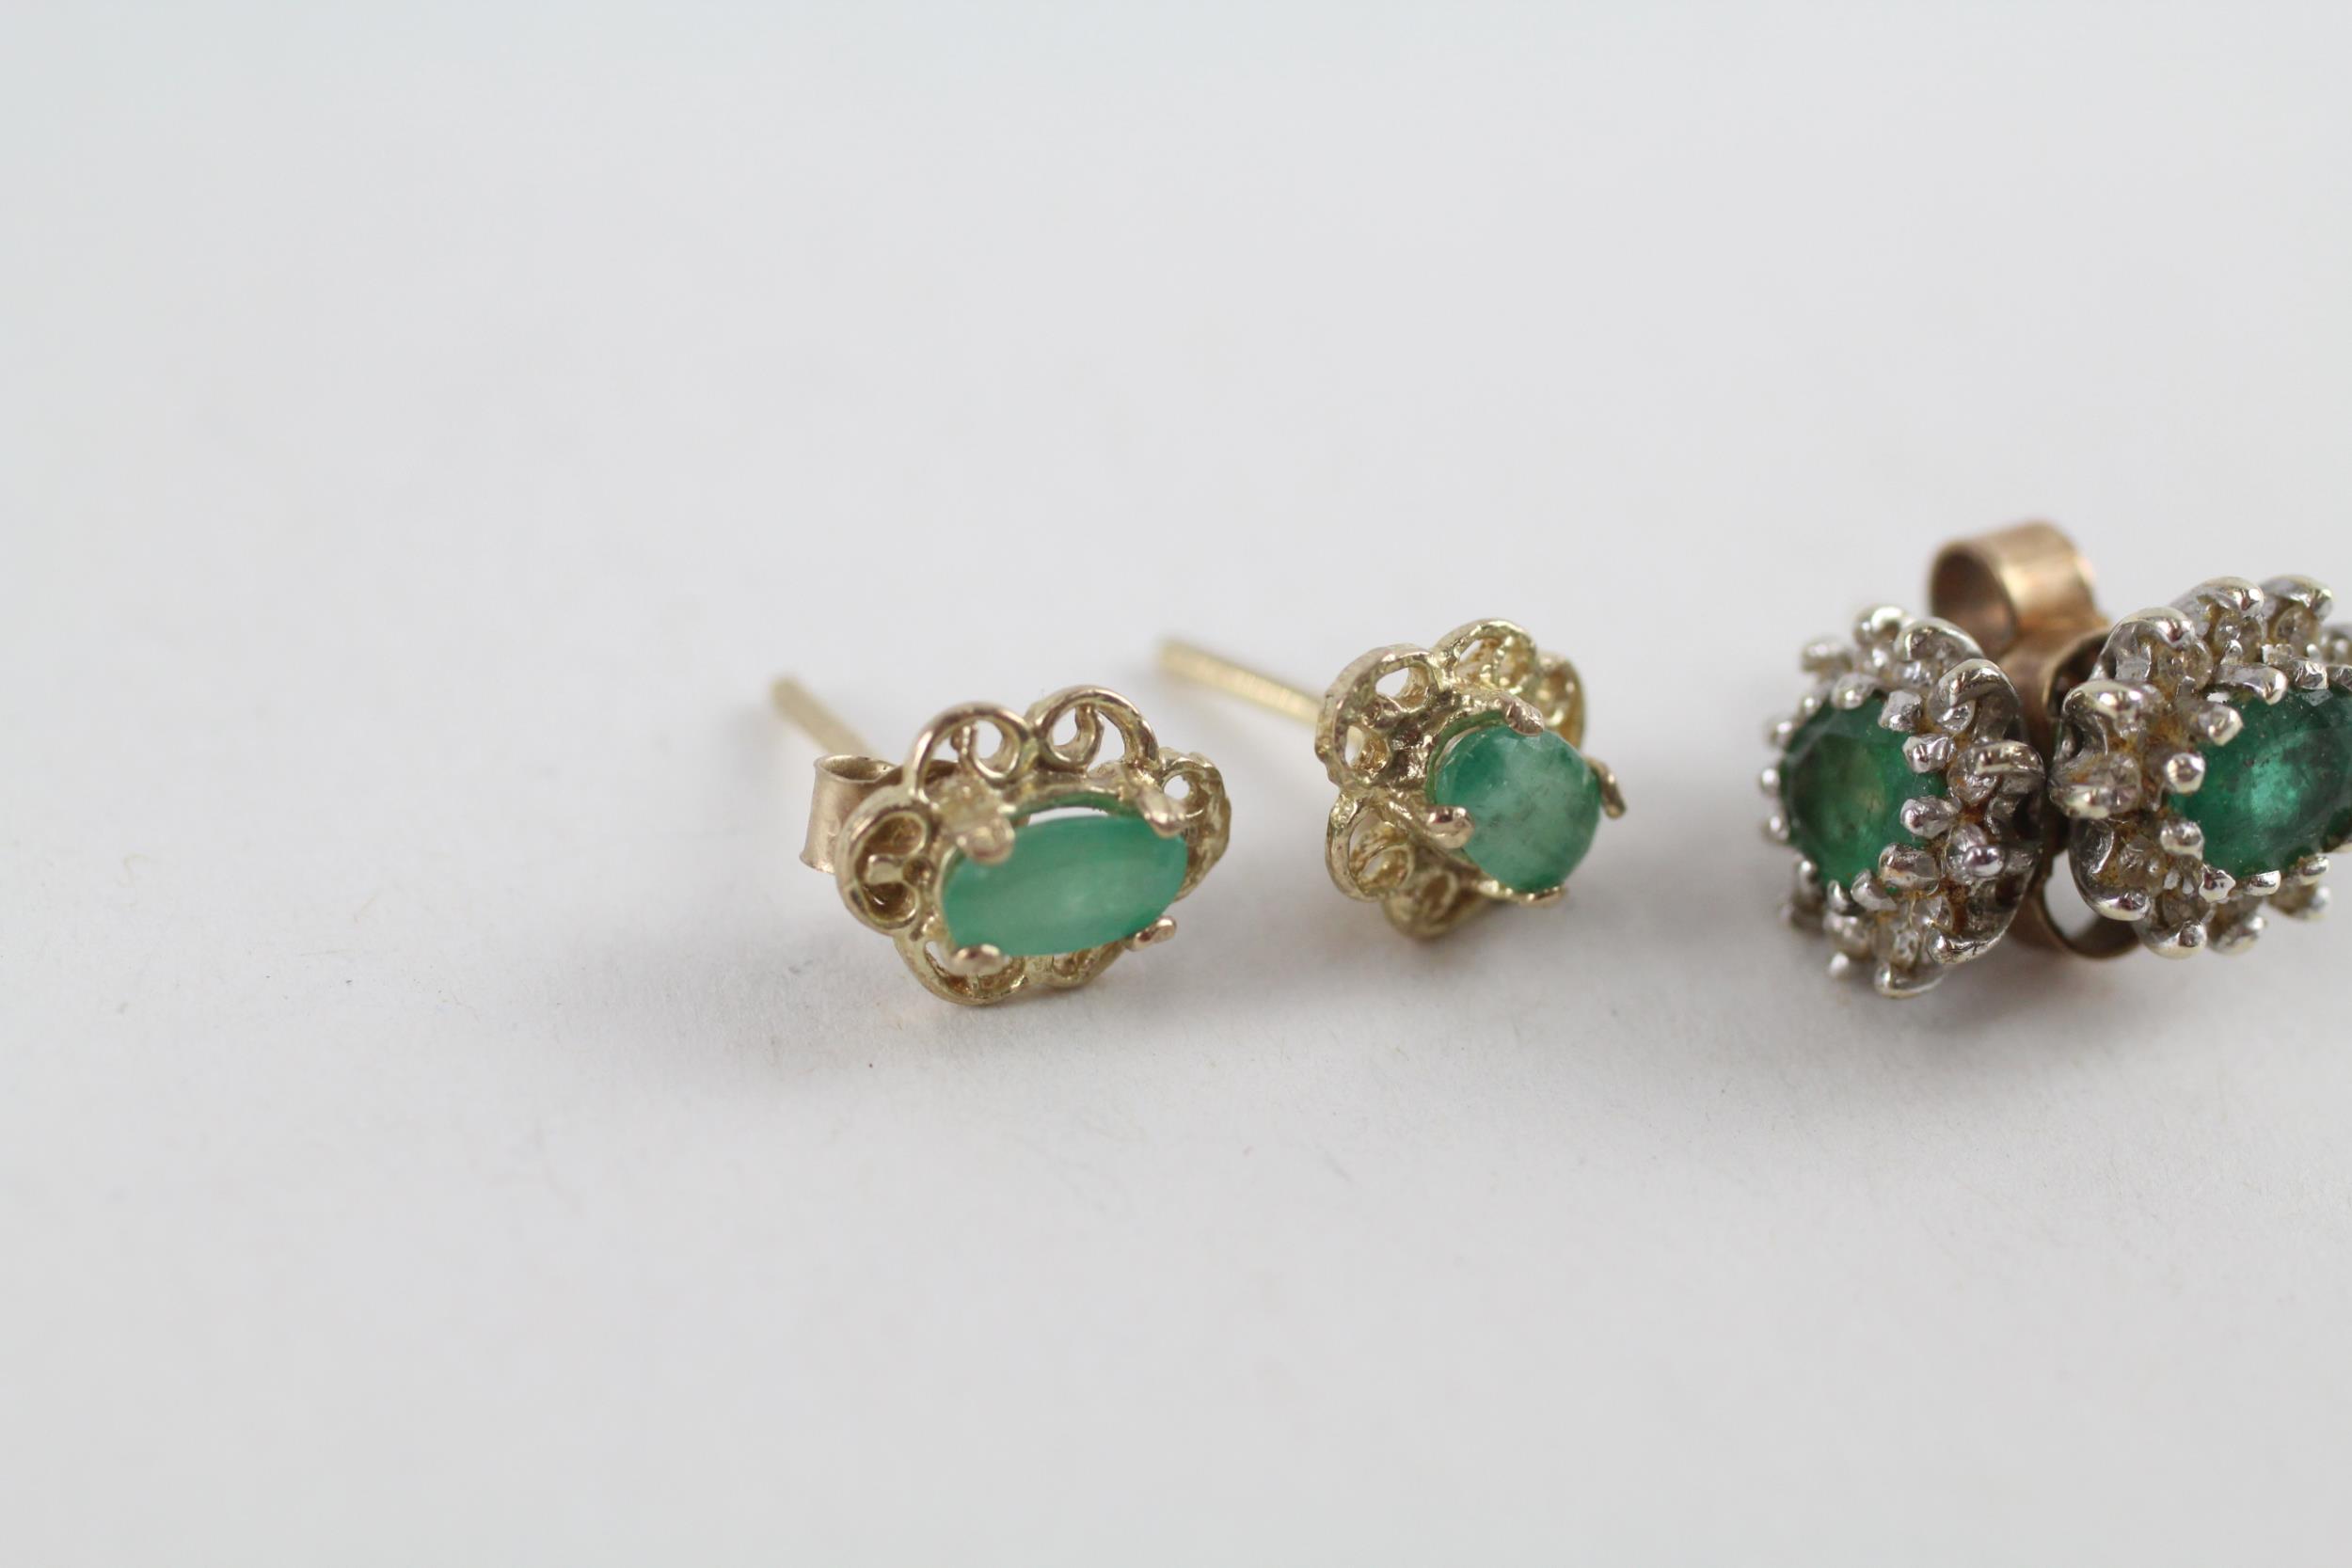 2x 9ct gold emerald & diamond earrings (2.3g) - Image 4 of 4